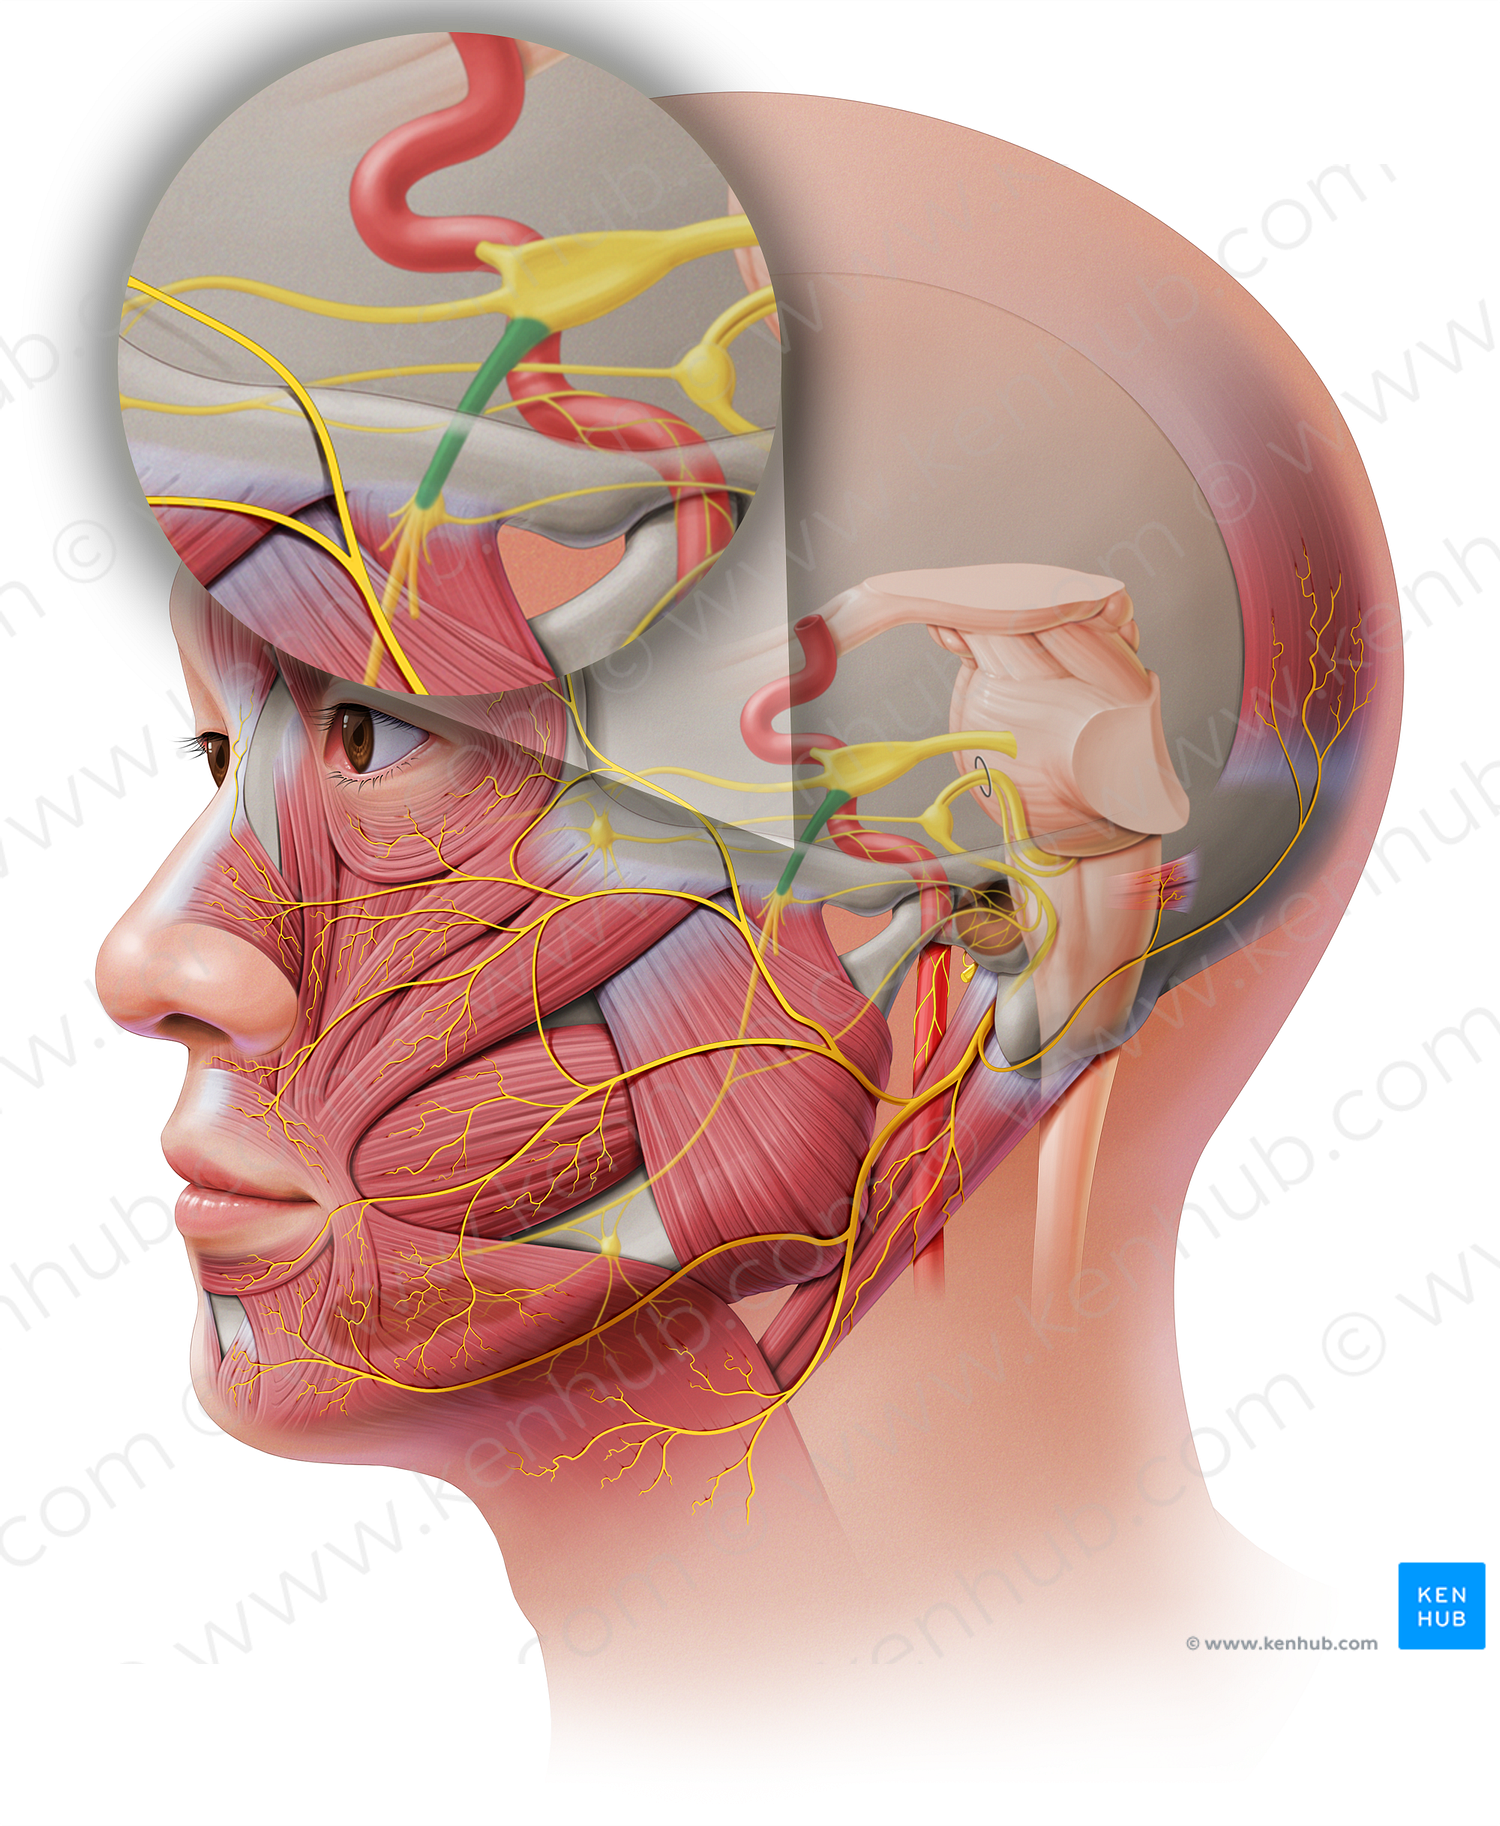 Mandibular nerve (#6549)